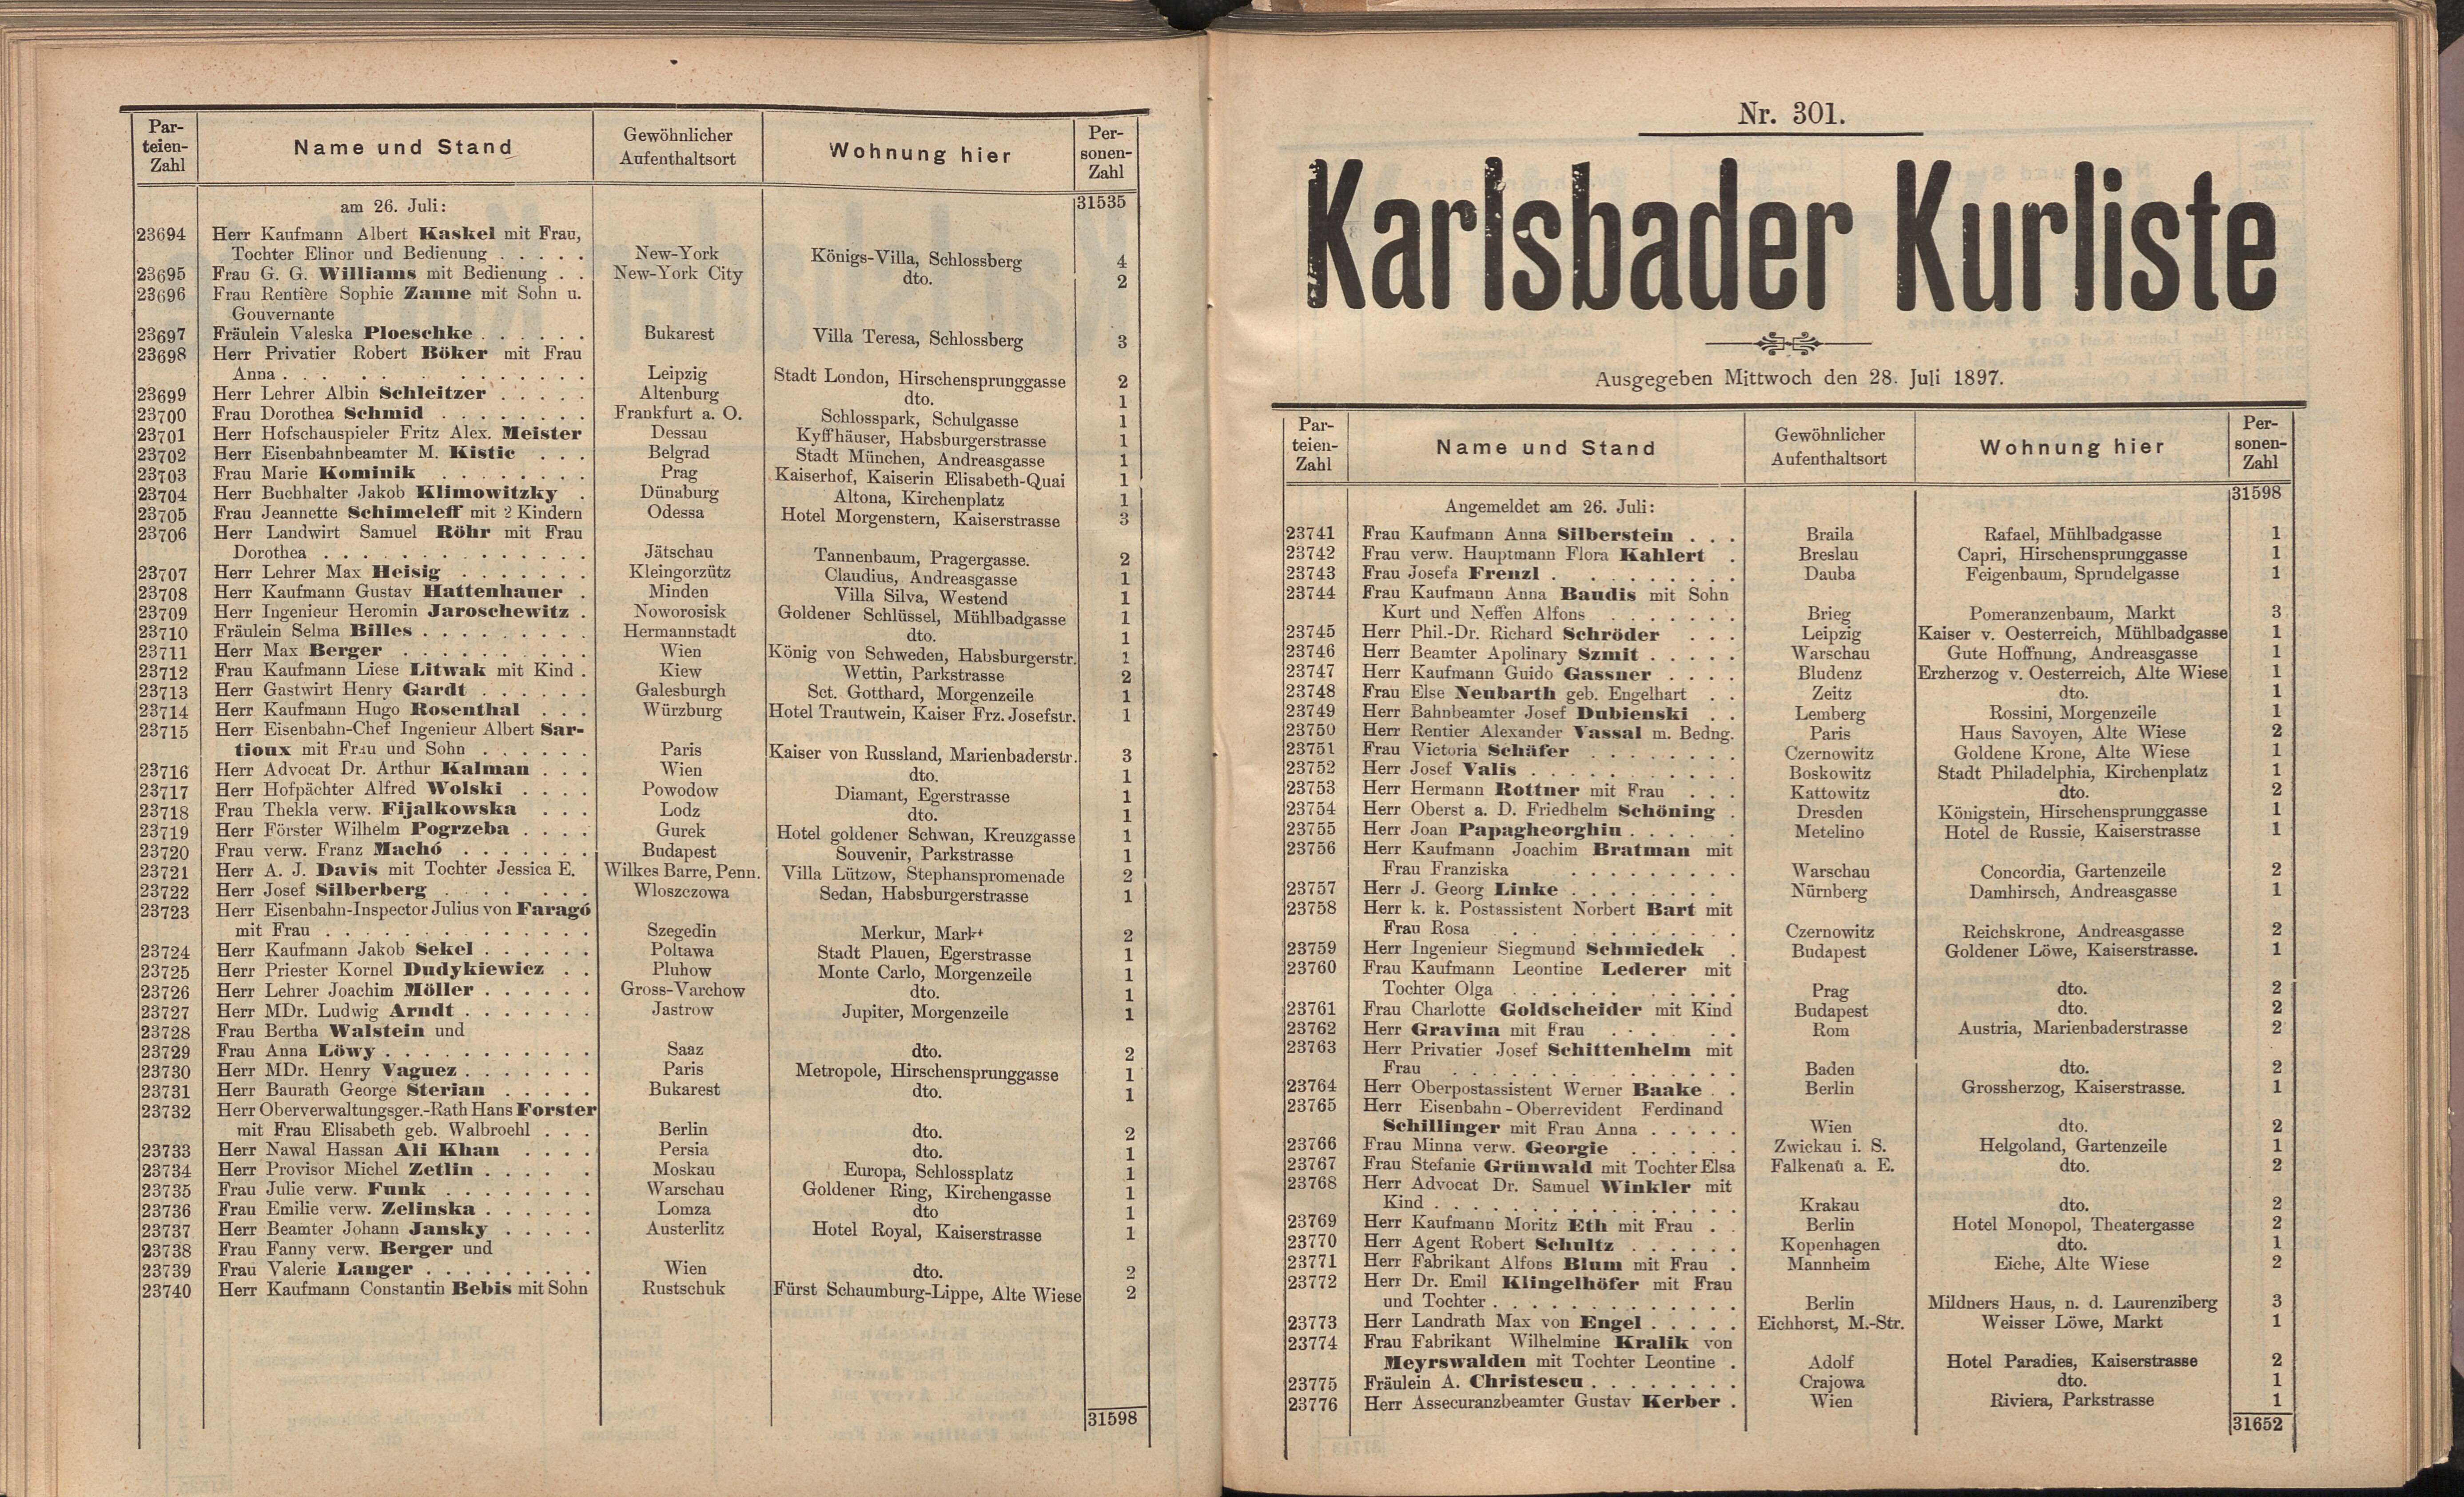 320. soap-kv_knihovna_karlsbader-kurliste-1897_3210